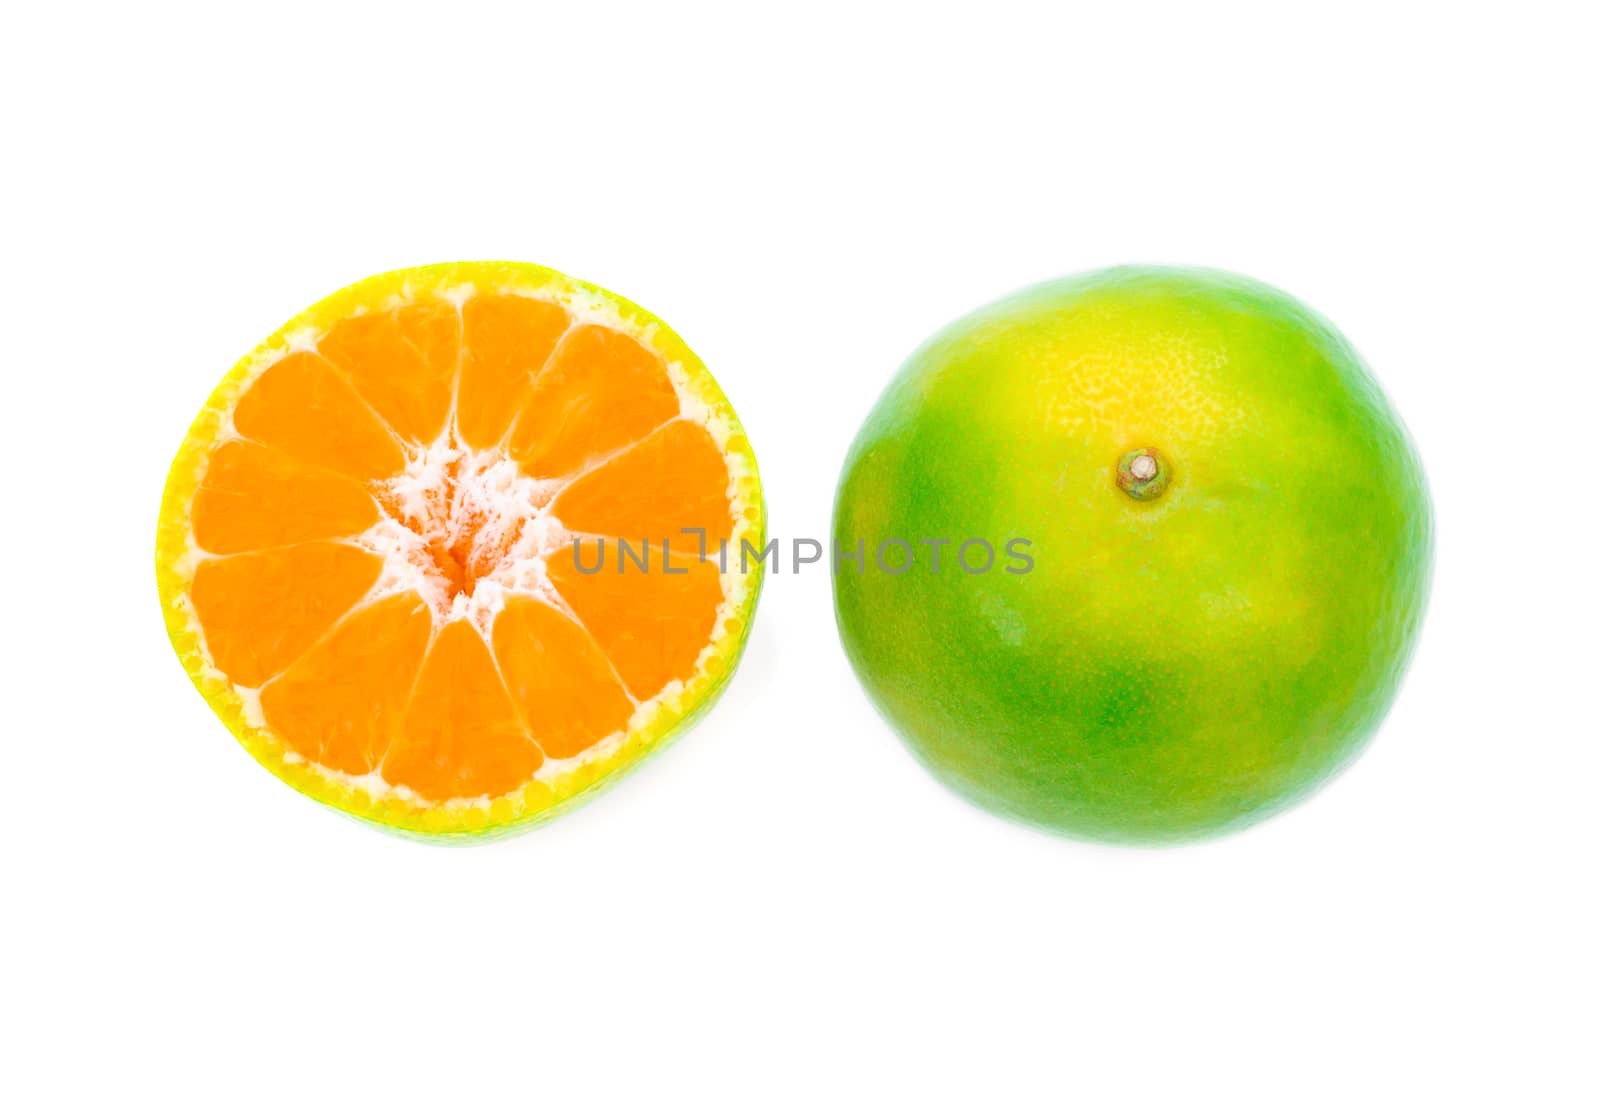 Shogun oranges fruit on a white background by sompongtom